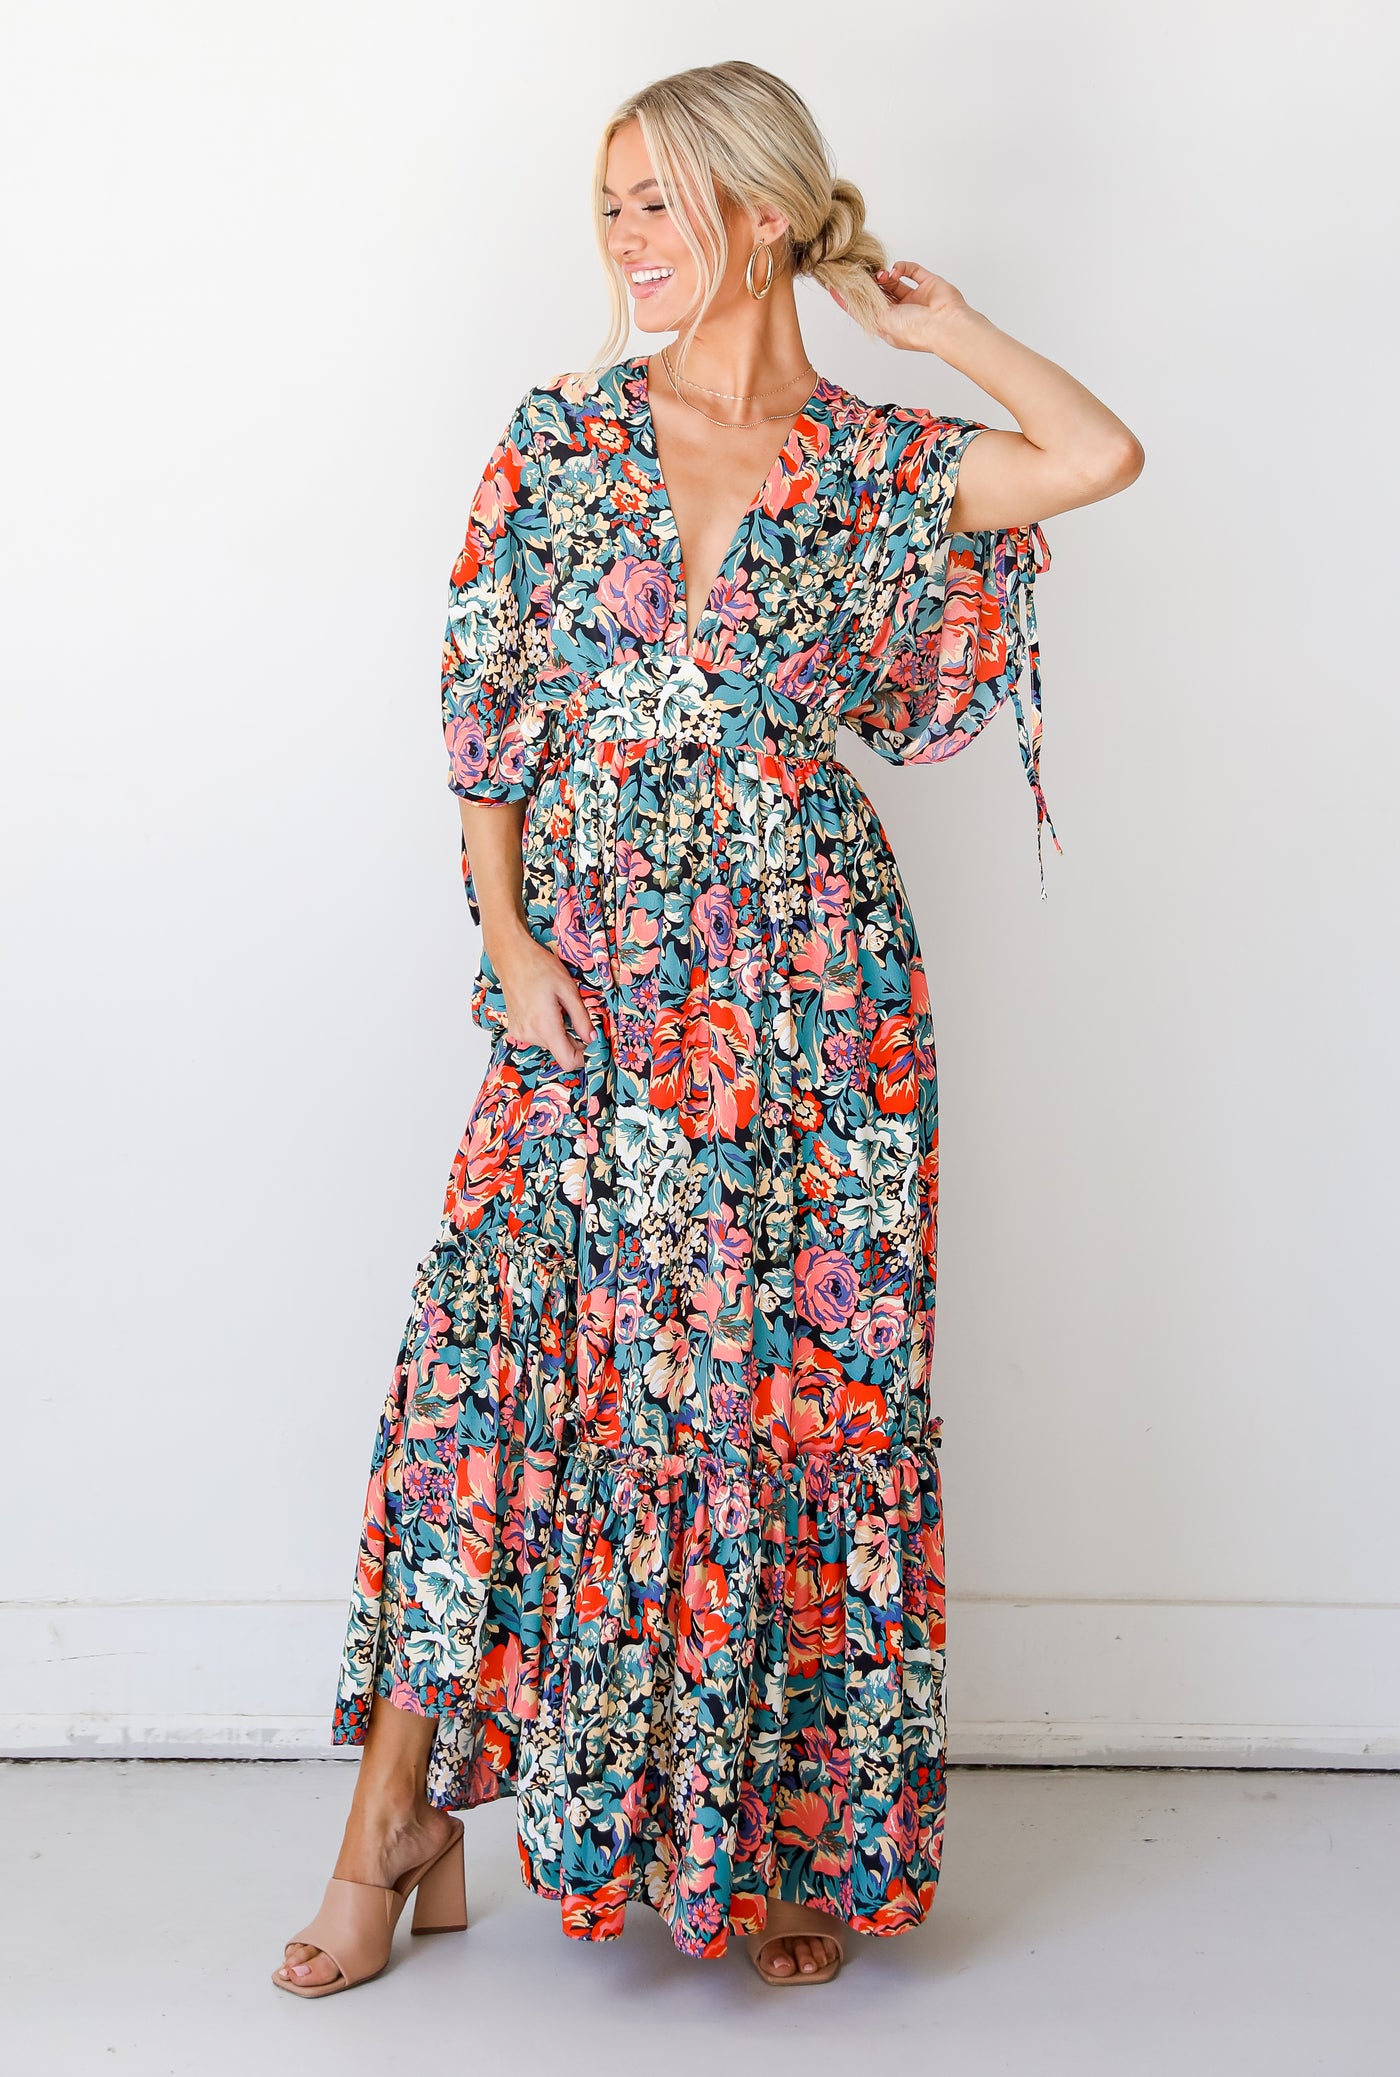 Floral Maxi Dress on model